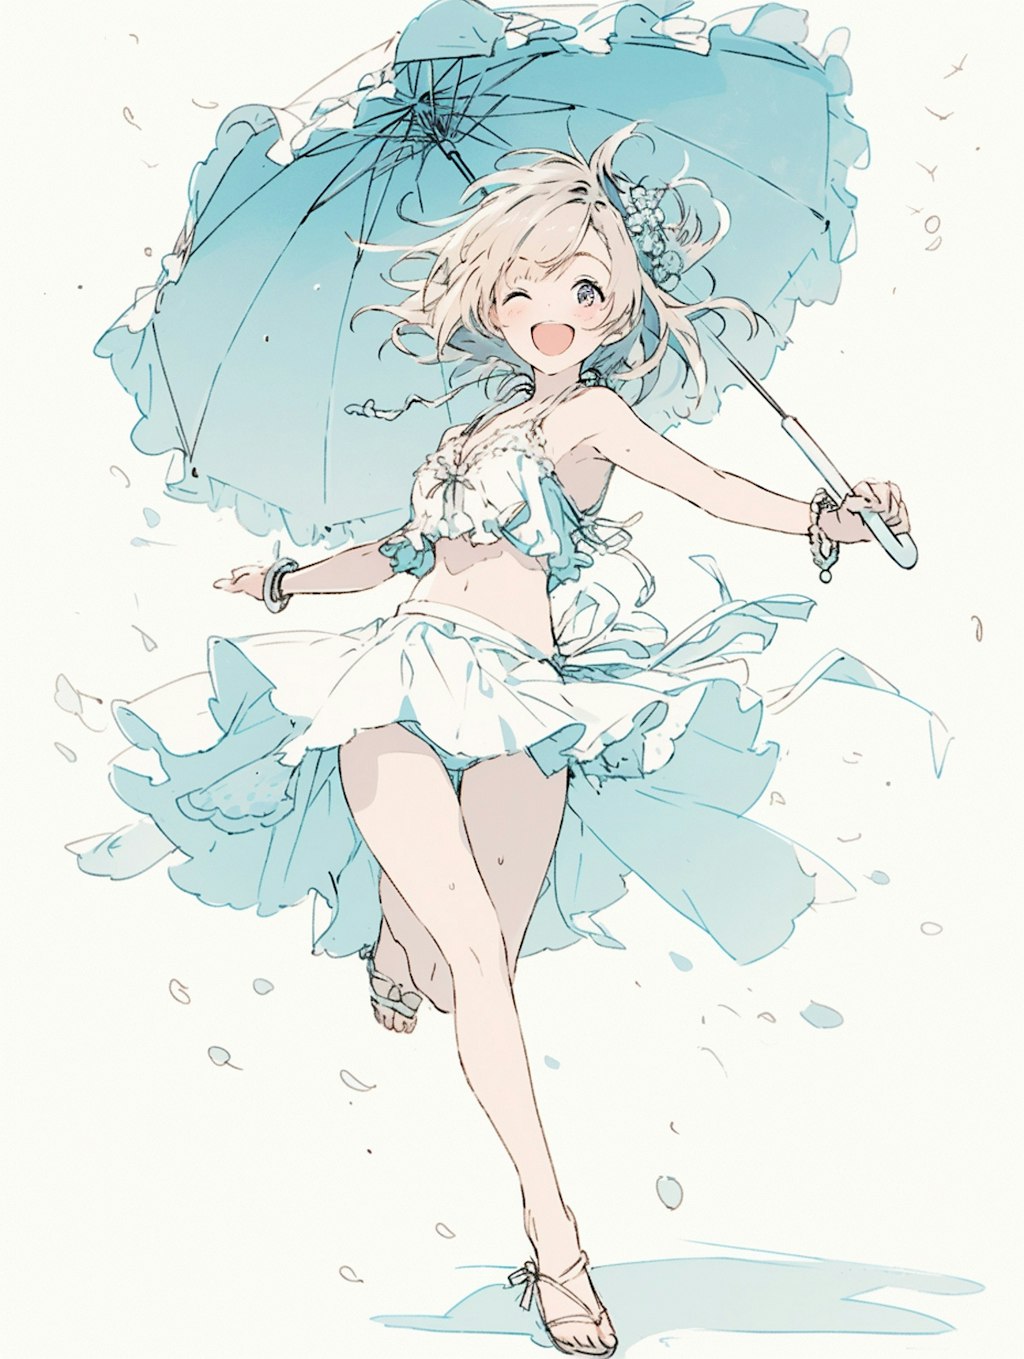 Umbrella Girl!2